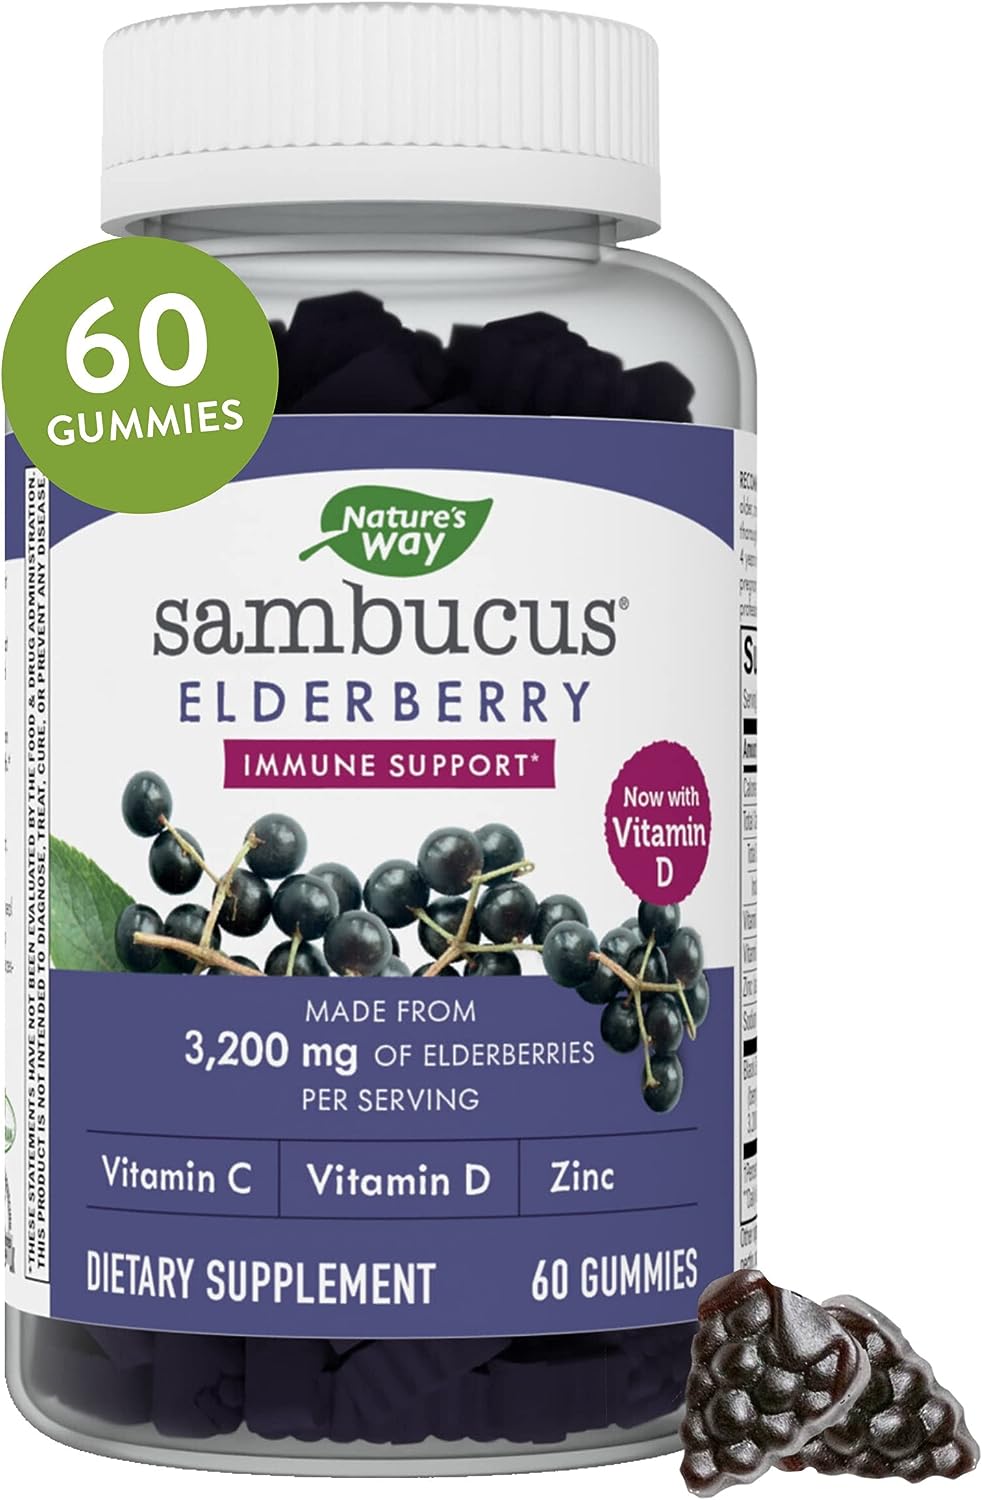 Nature’s Way Sambucus Elderberry Gummies Review